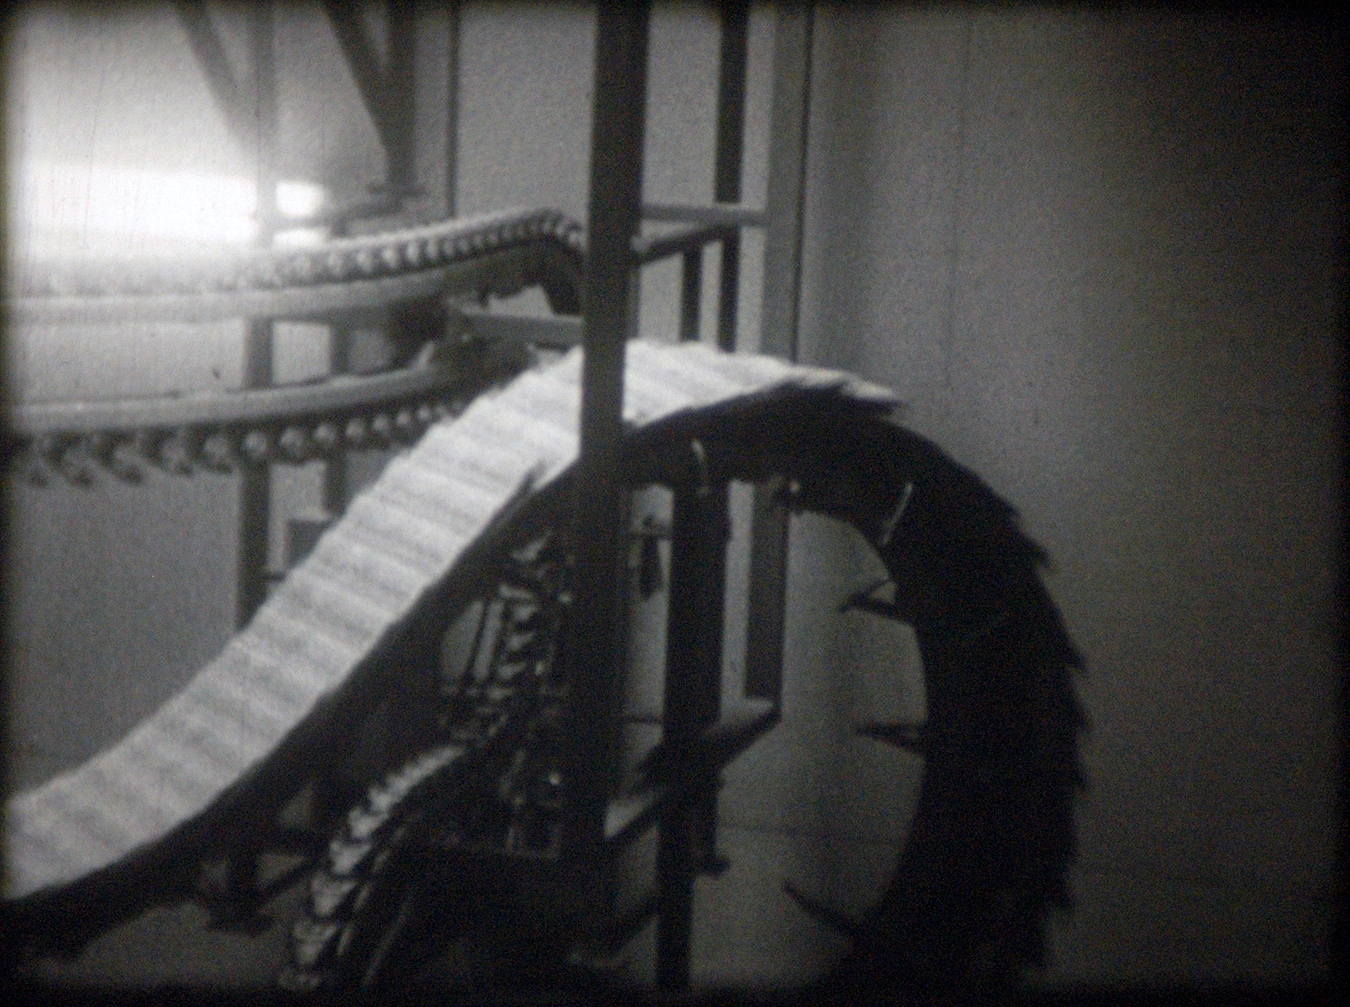 The Press, Kodak Eastman 5222, 16mm film, 1:30 continuous loop. Camera: John Chrisstoffels, 2012 Photo credit Paul Johns